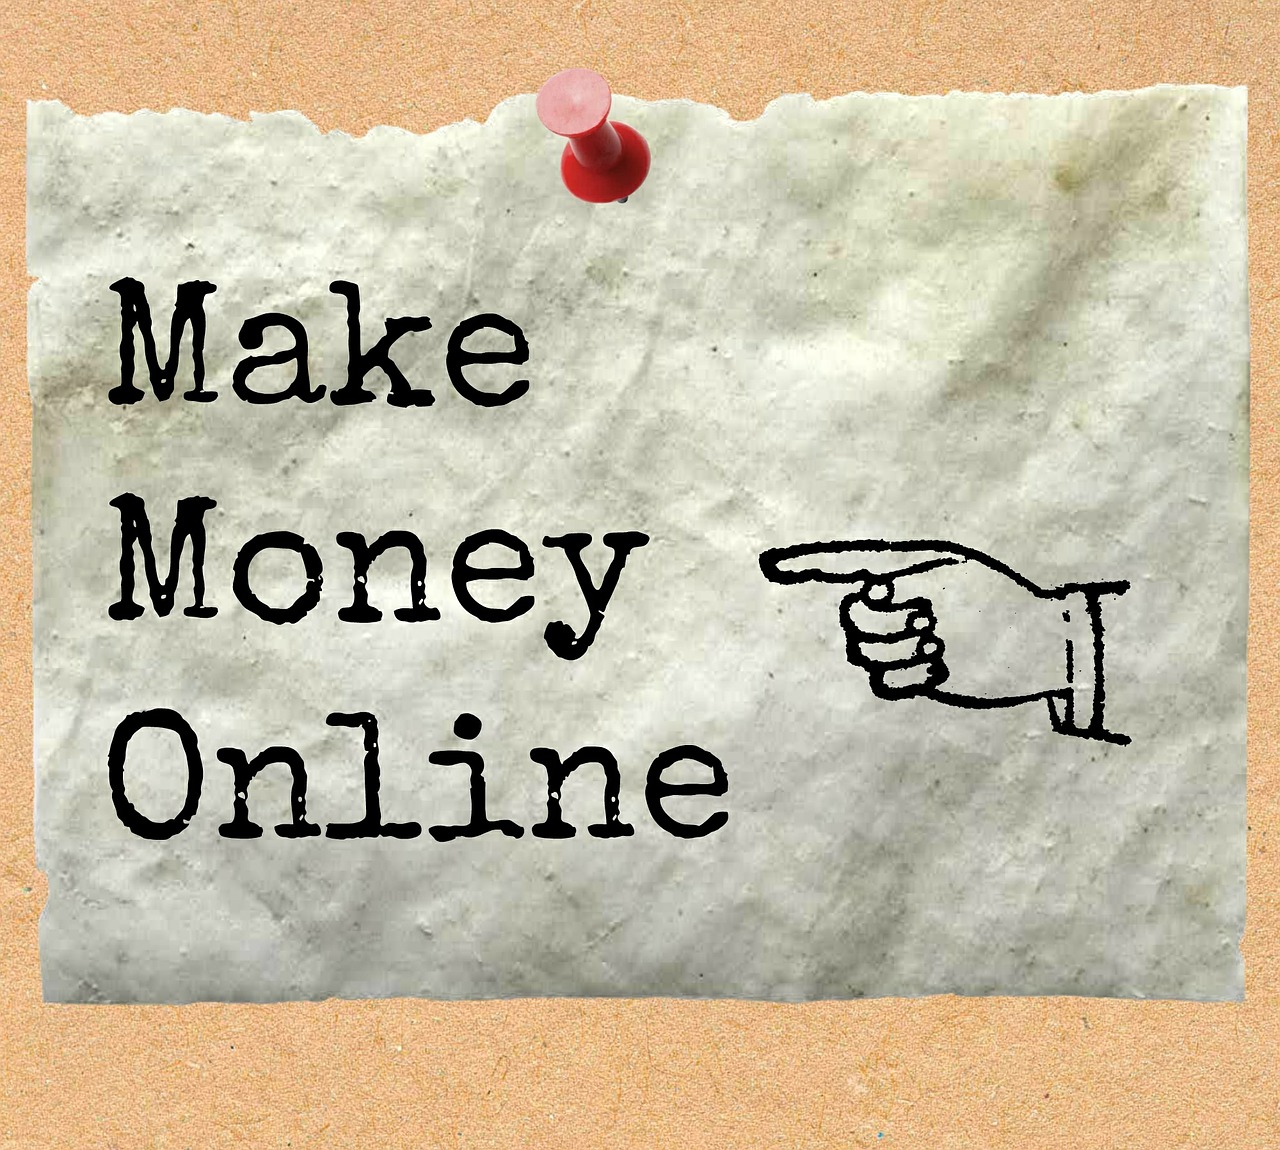 Download free photo of Make money,notice,scrap paper,text,push-pin - from needpix.com